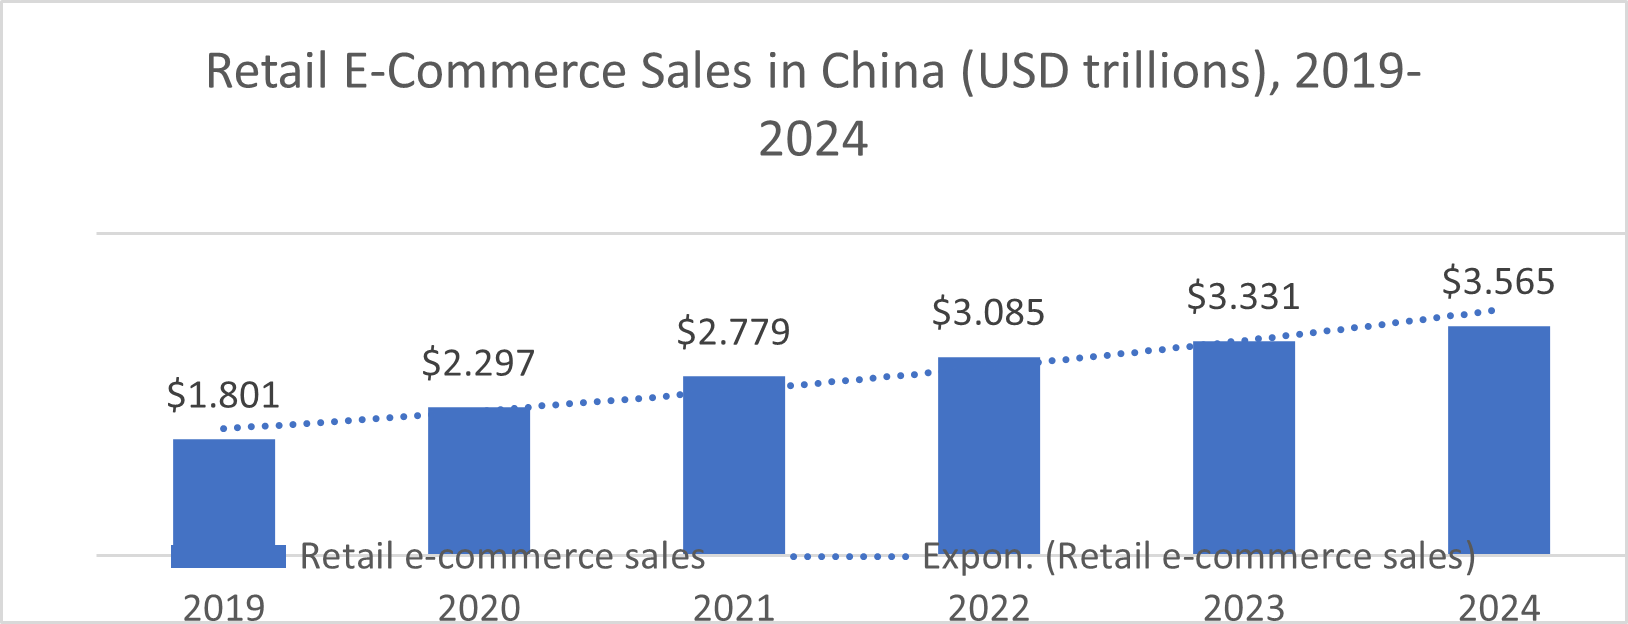 Retail E-Commerce Sales in China (USD trillions), 2019-2024